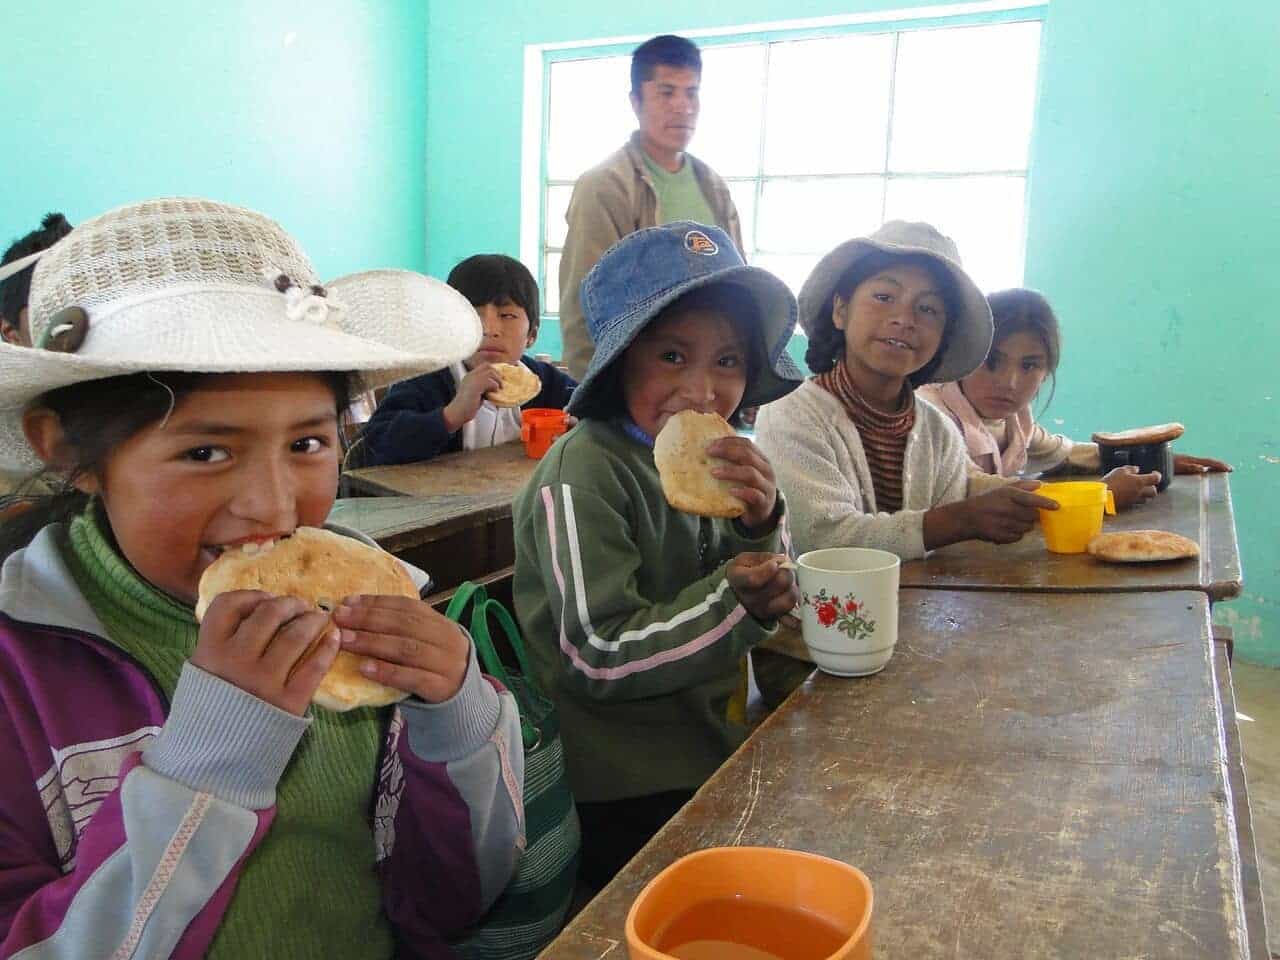 Bolivian school children eating their lunch